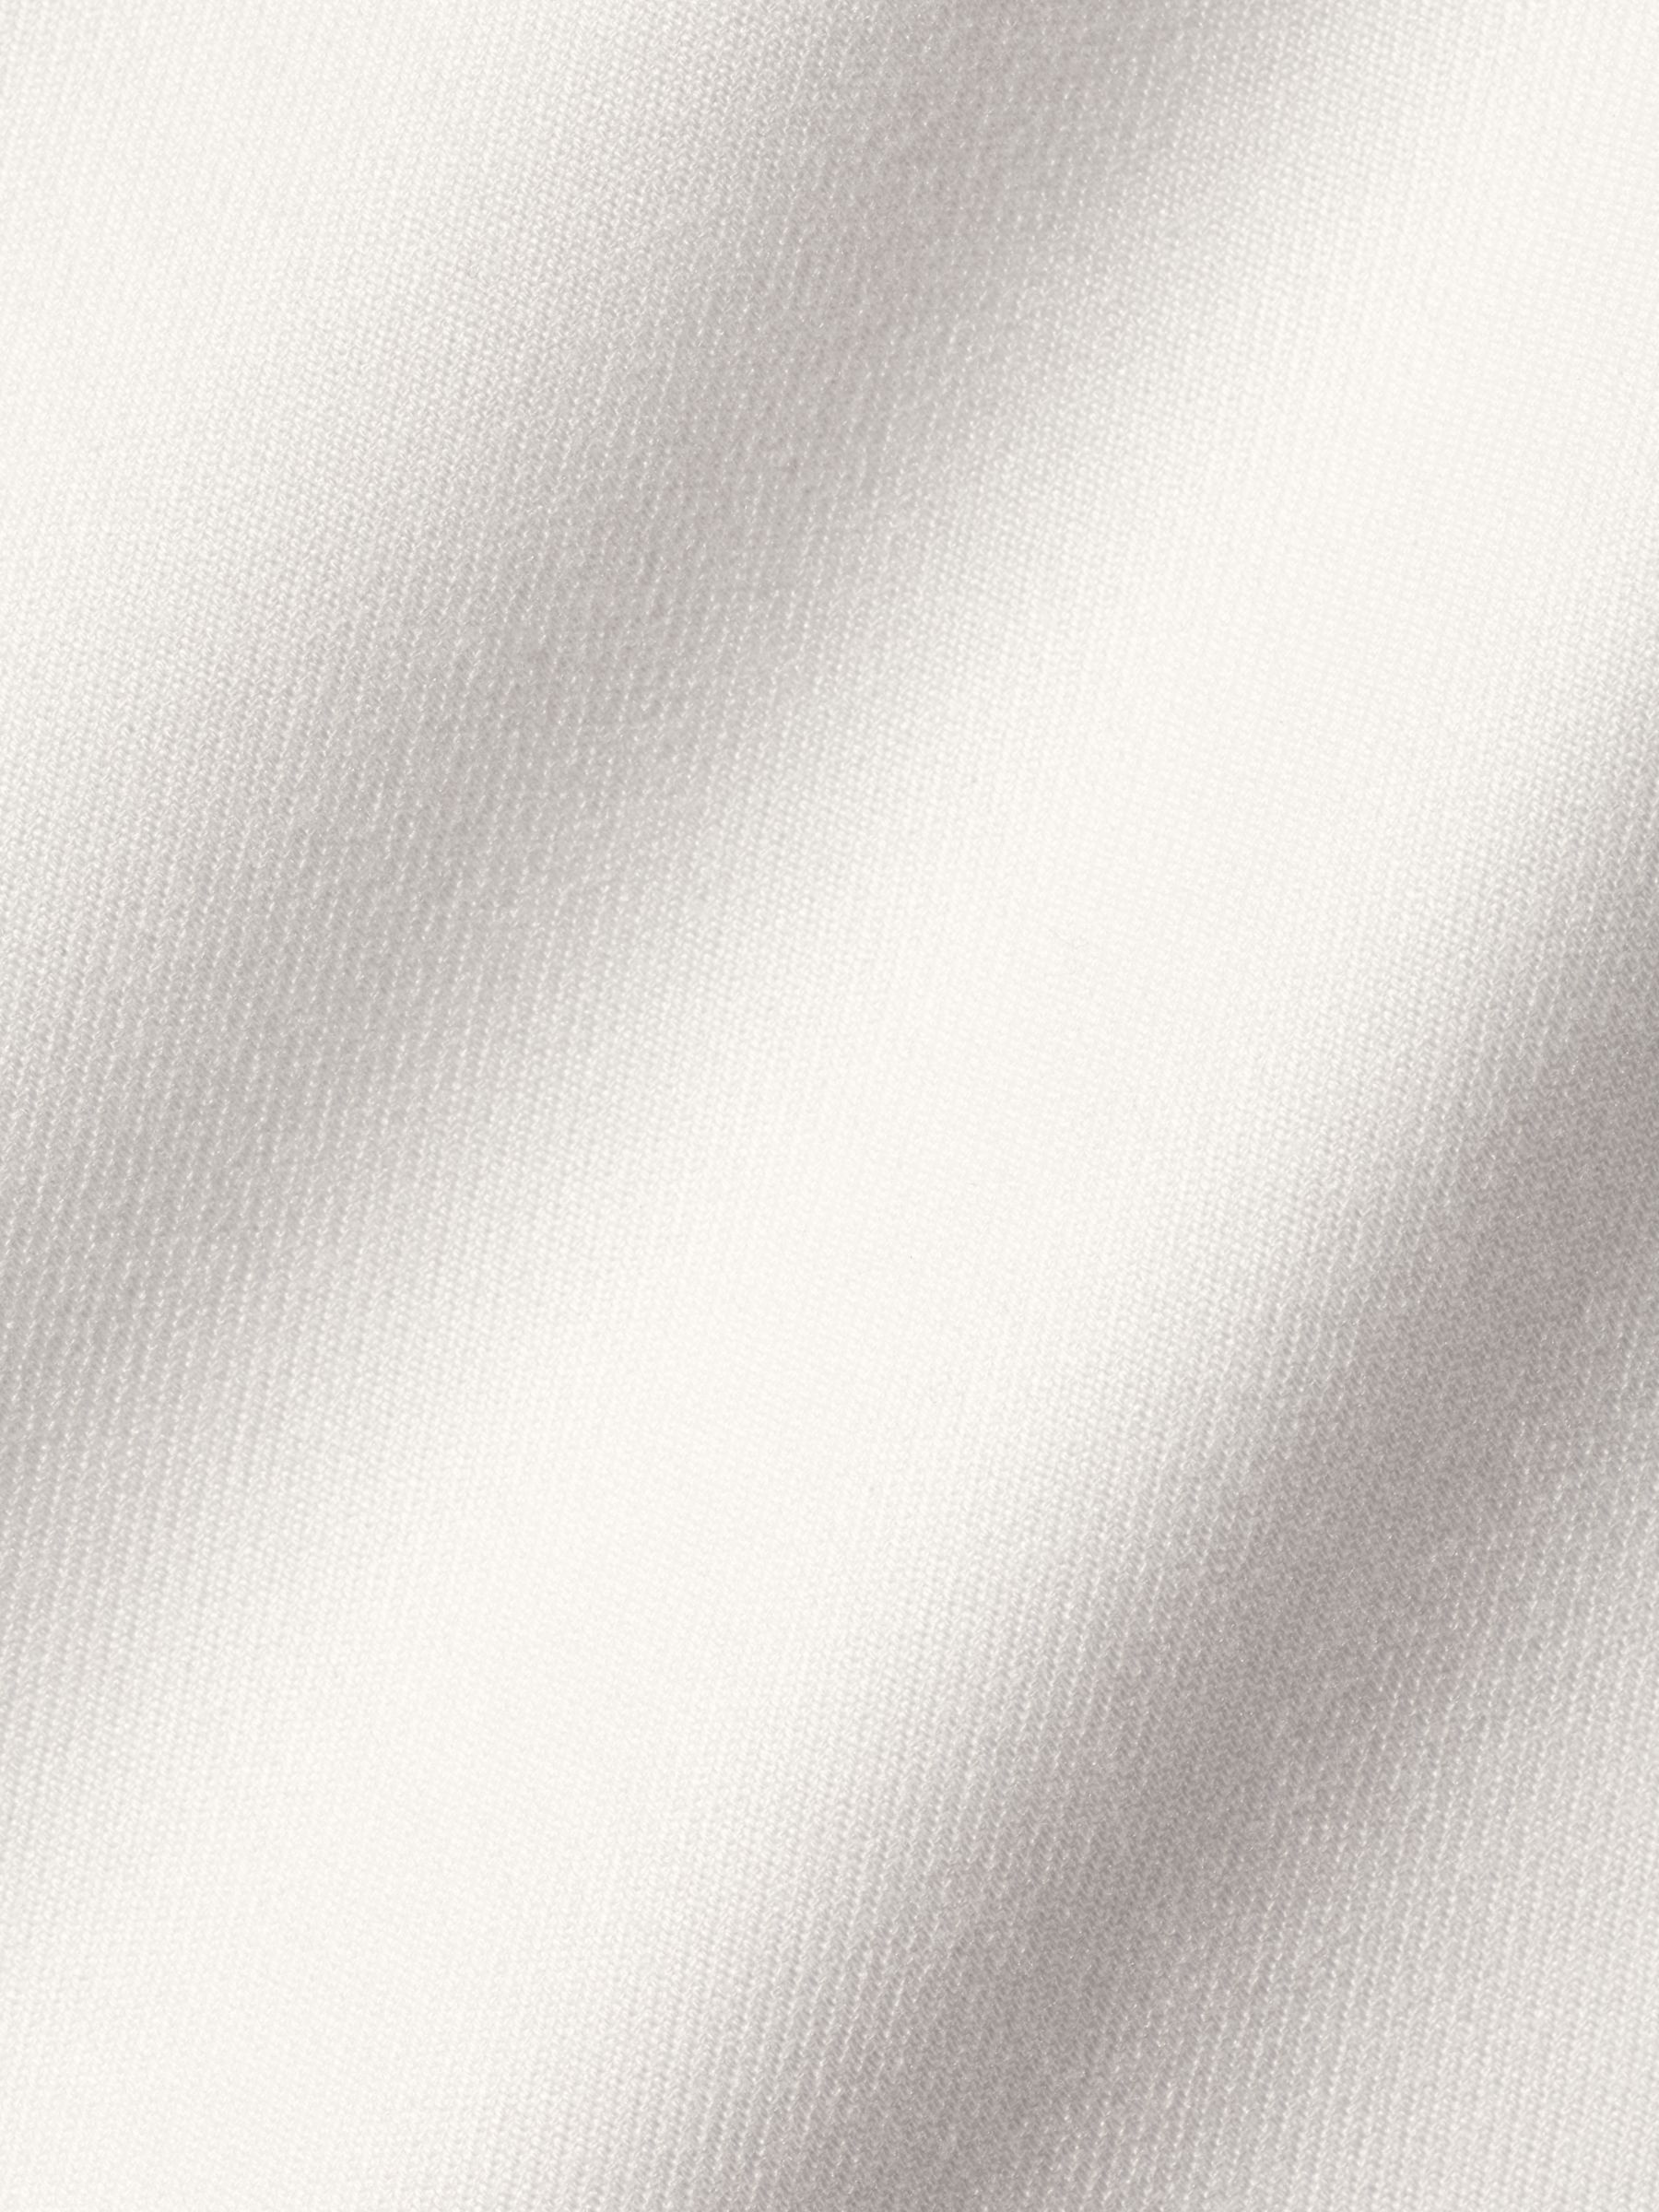 Charles Tyrwhitt Cotton Single Cuff Shirt, Ivory, 14.5